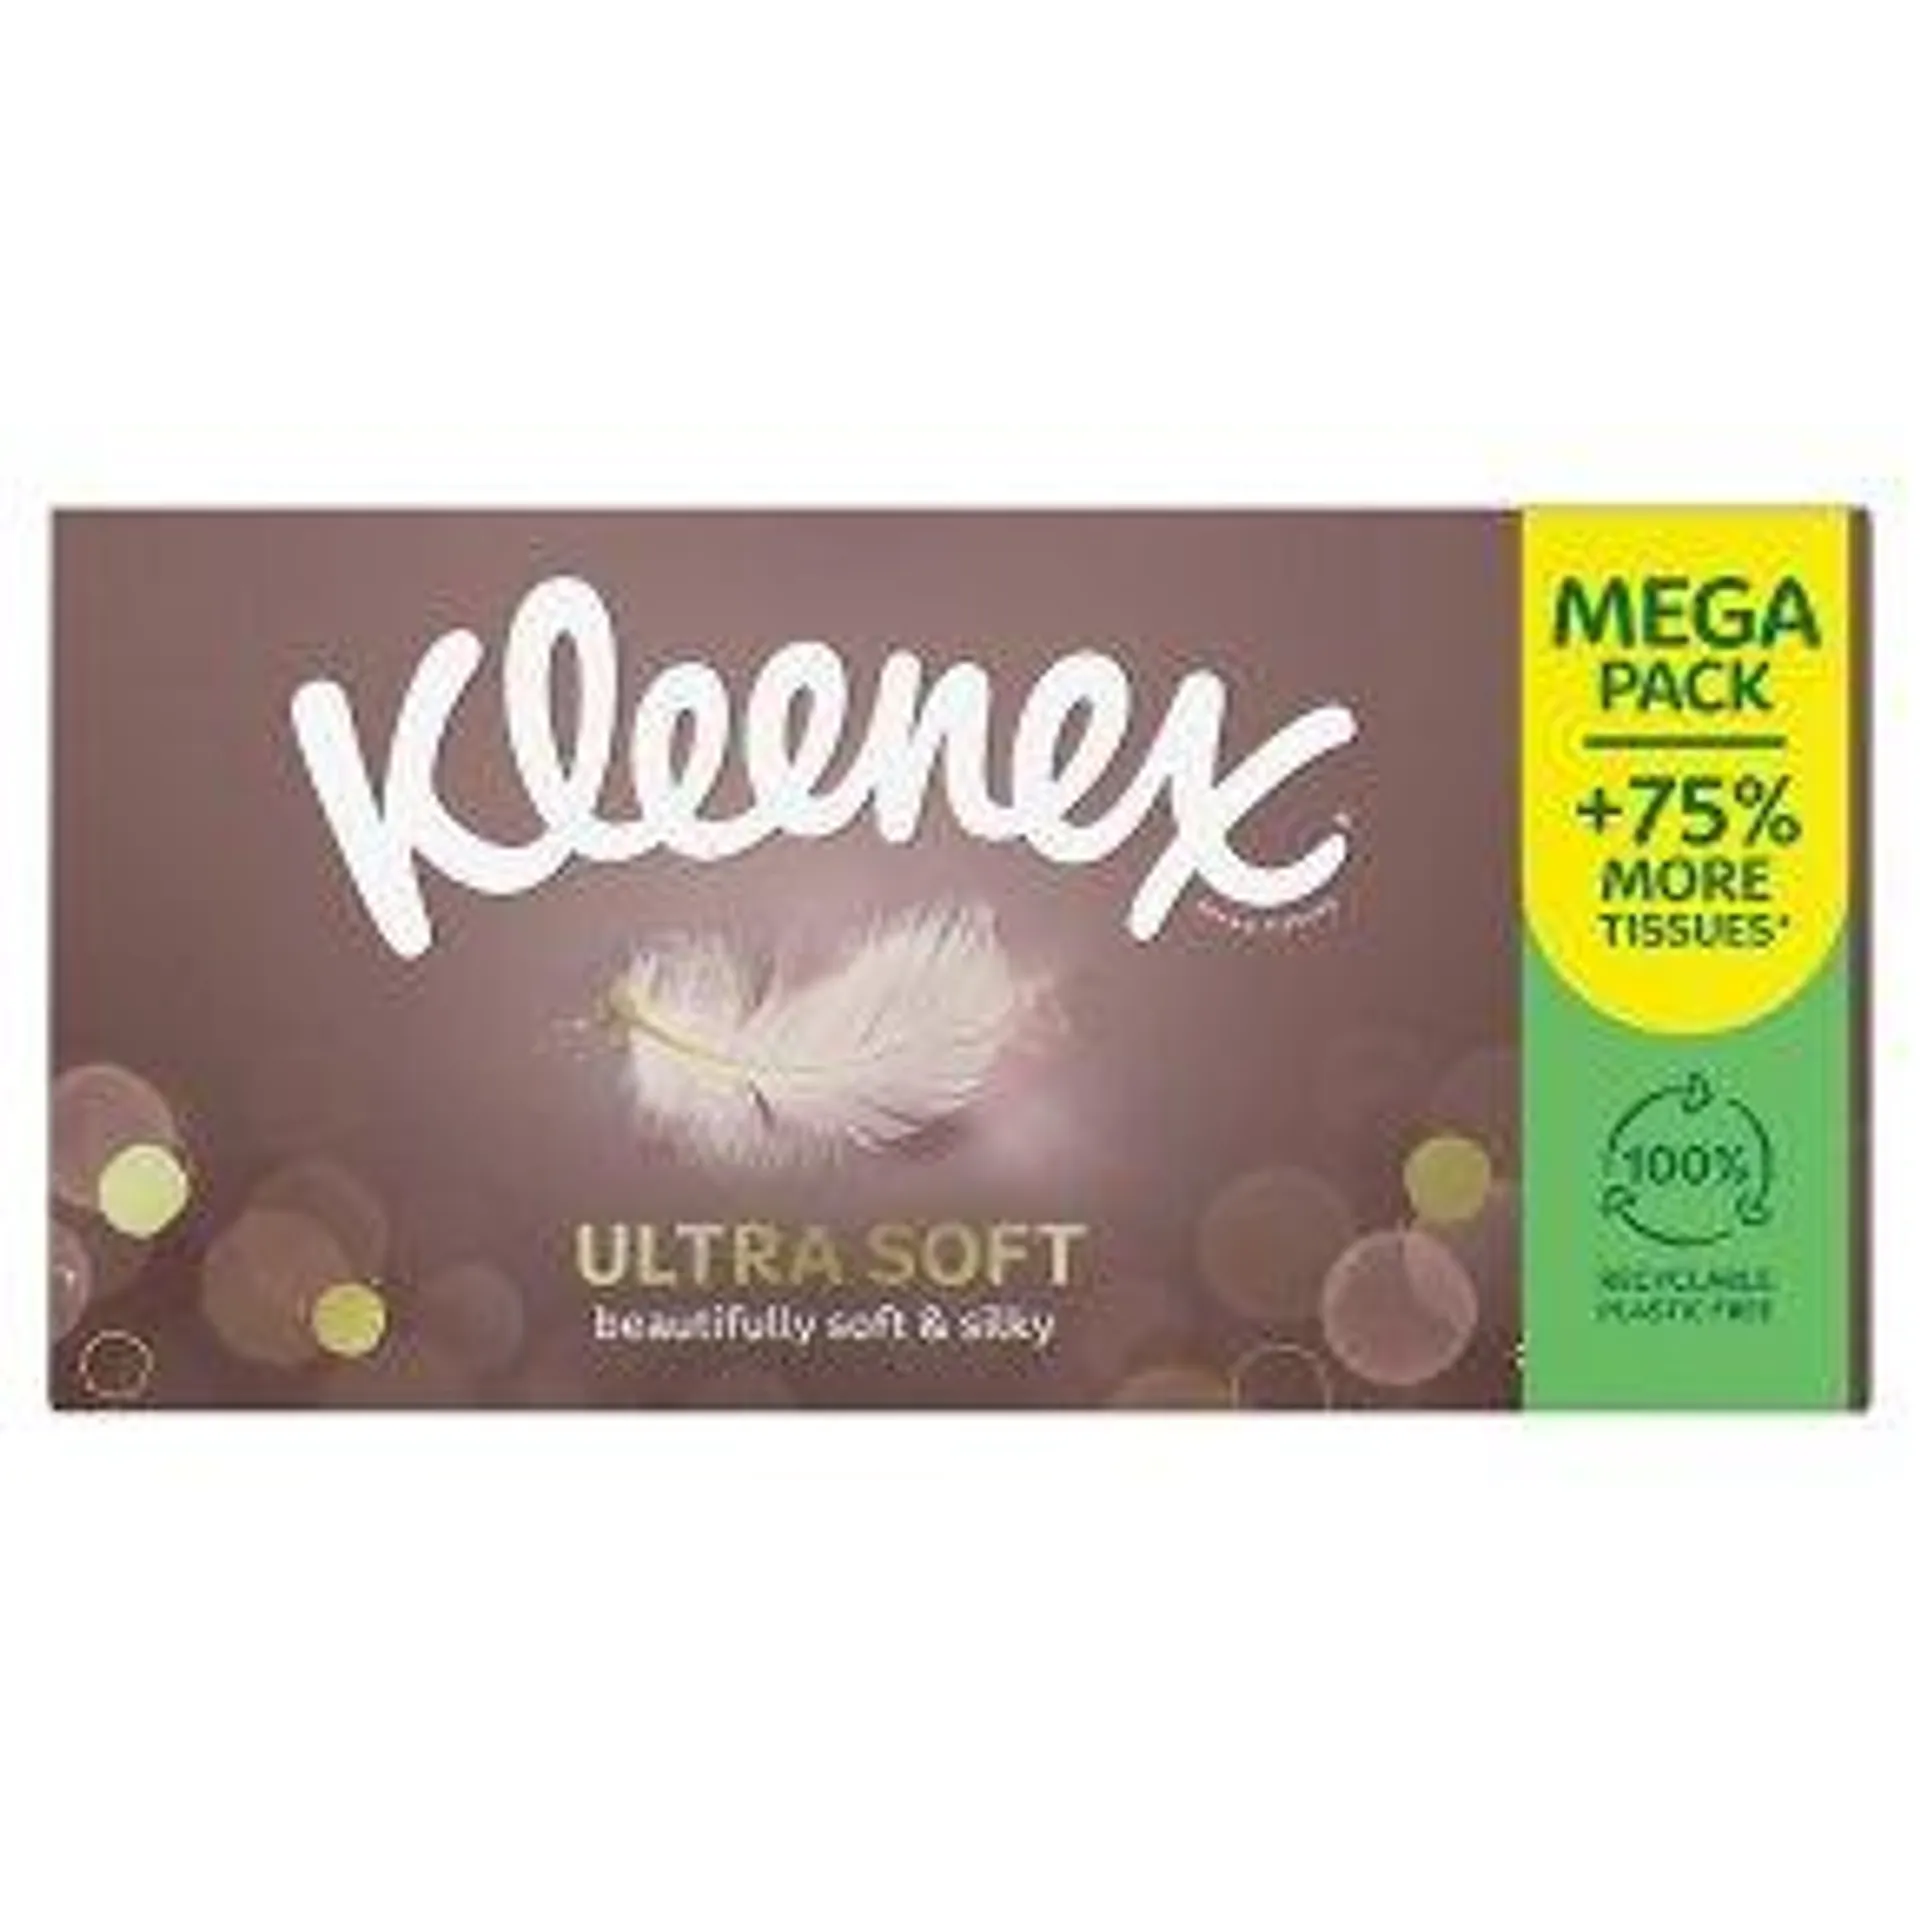 Kleenex Ultra Soft Tissues Twin Pack